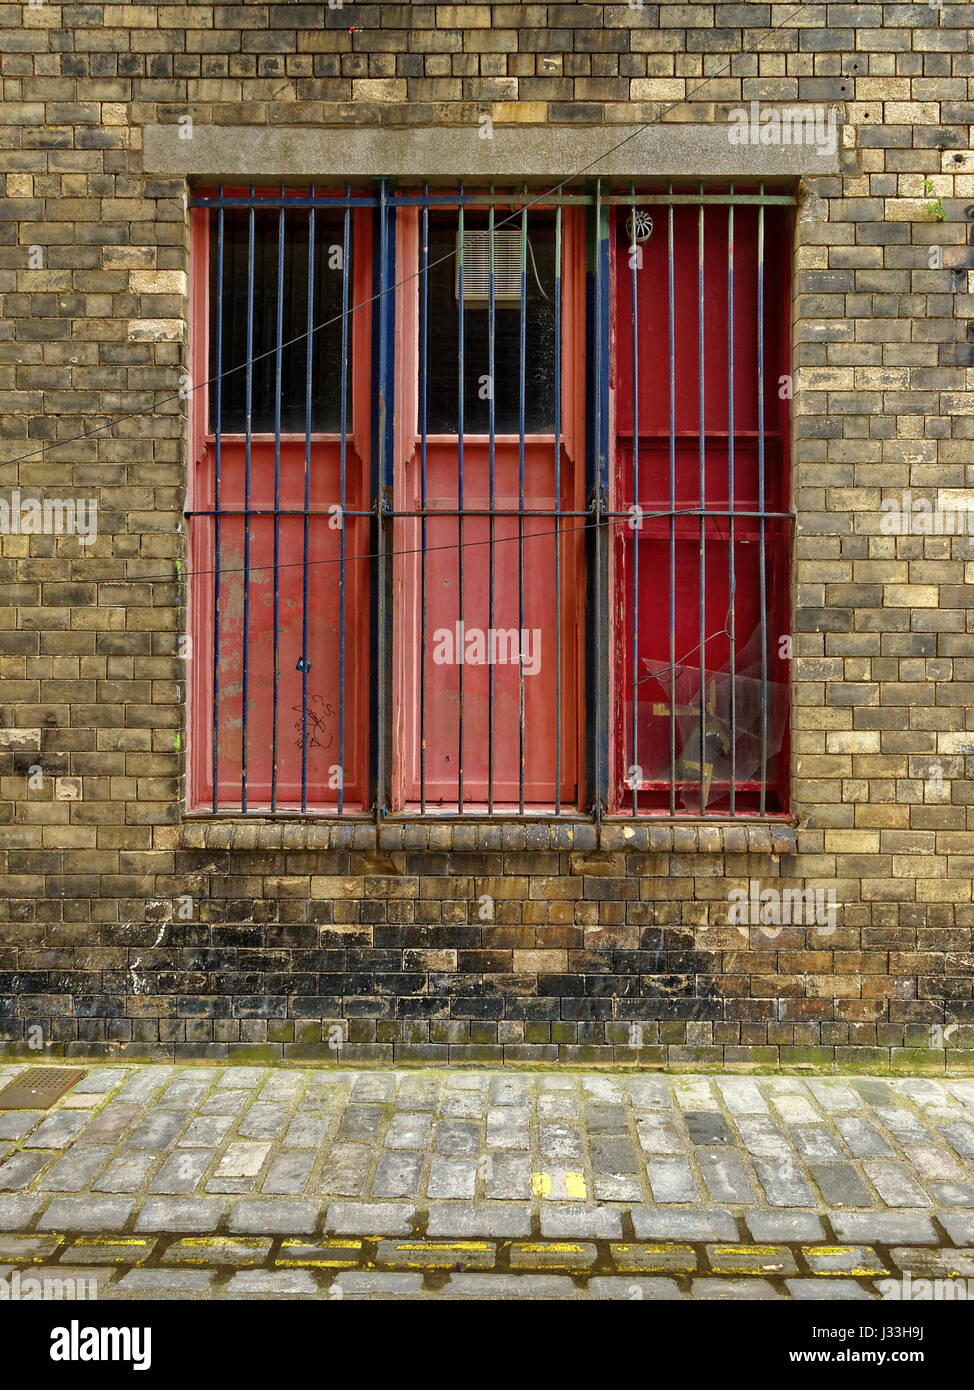 Glasgow alley it backstreet bars on windows dilapidated doors and windows Stock Photo